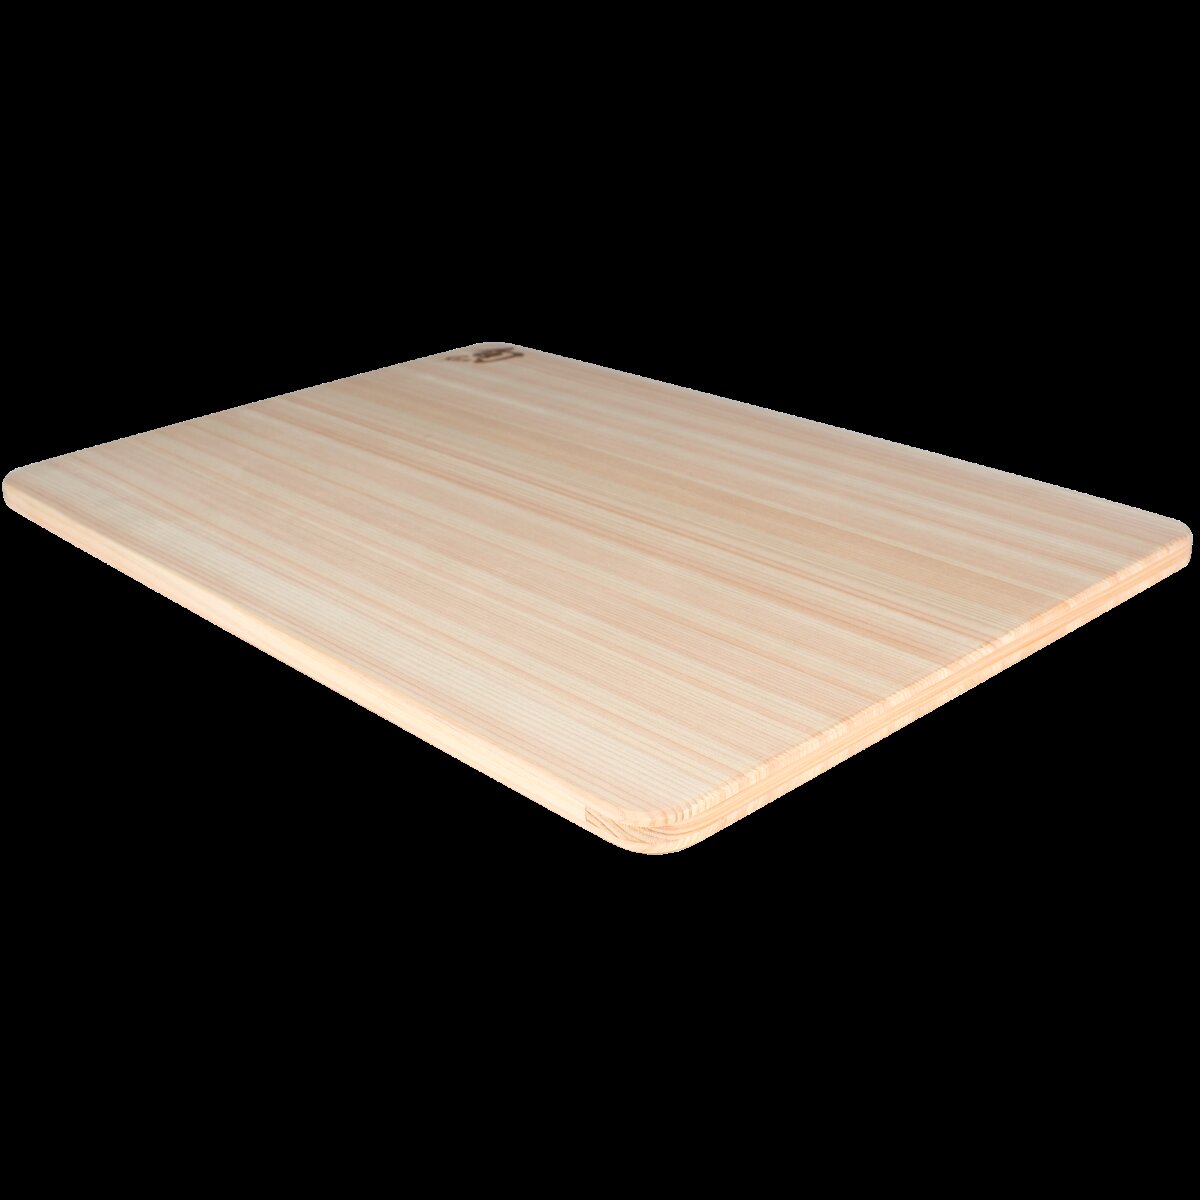 Shun Cutlery Large Hinoki Cutting Board, 17.75 x 11.75 Large Wood Cutting  Board, Medium-Soft Wood Preserves Knife Edges, Authentic, Japanese Kitchen